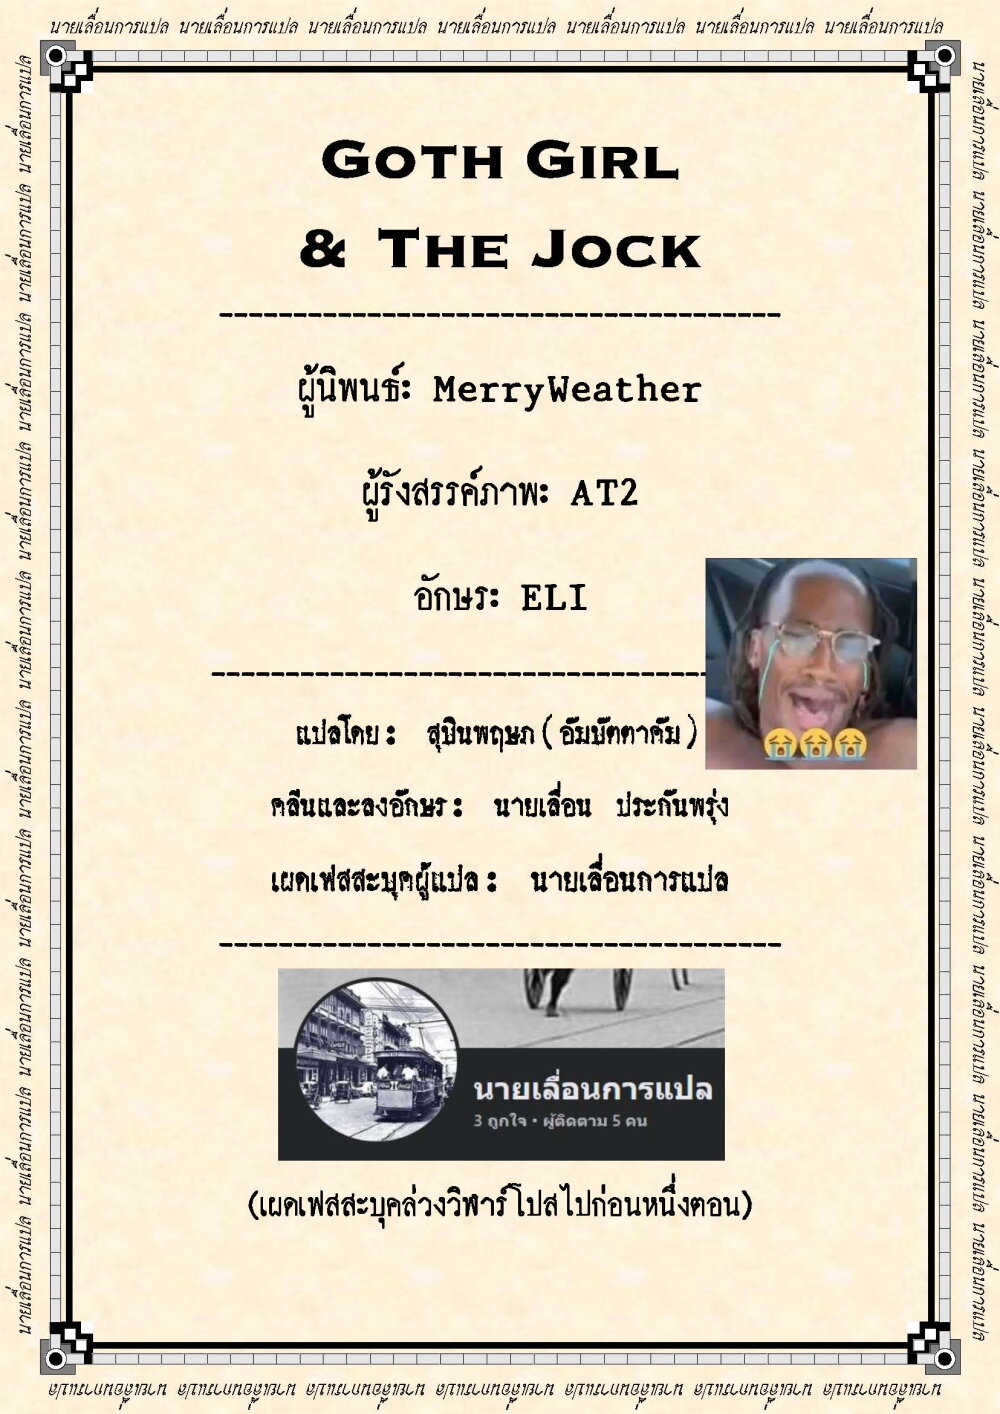 Goth Girl & The Jock 24 11